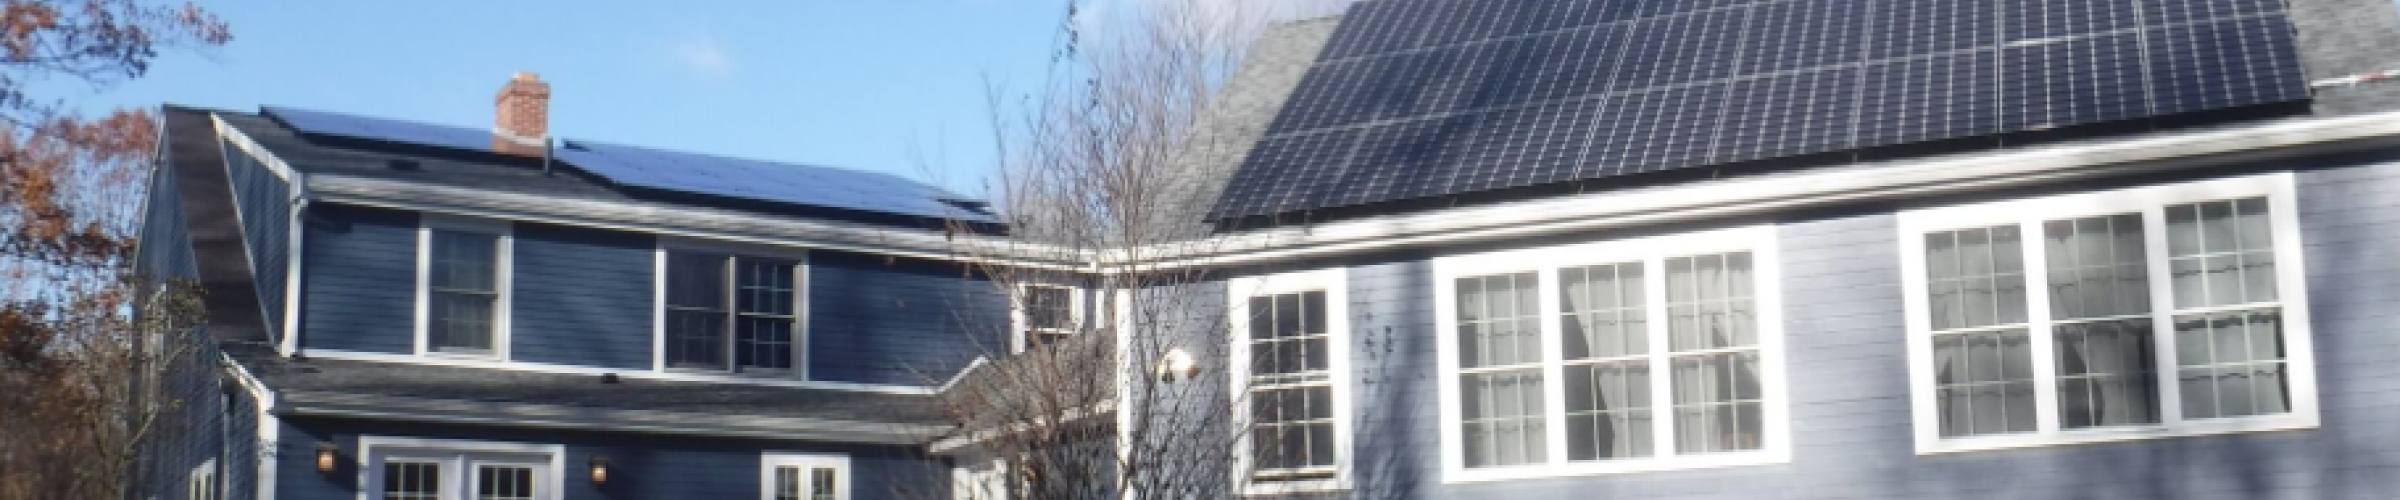 16.415 kW Solar Installation in West Newbury MA